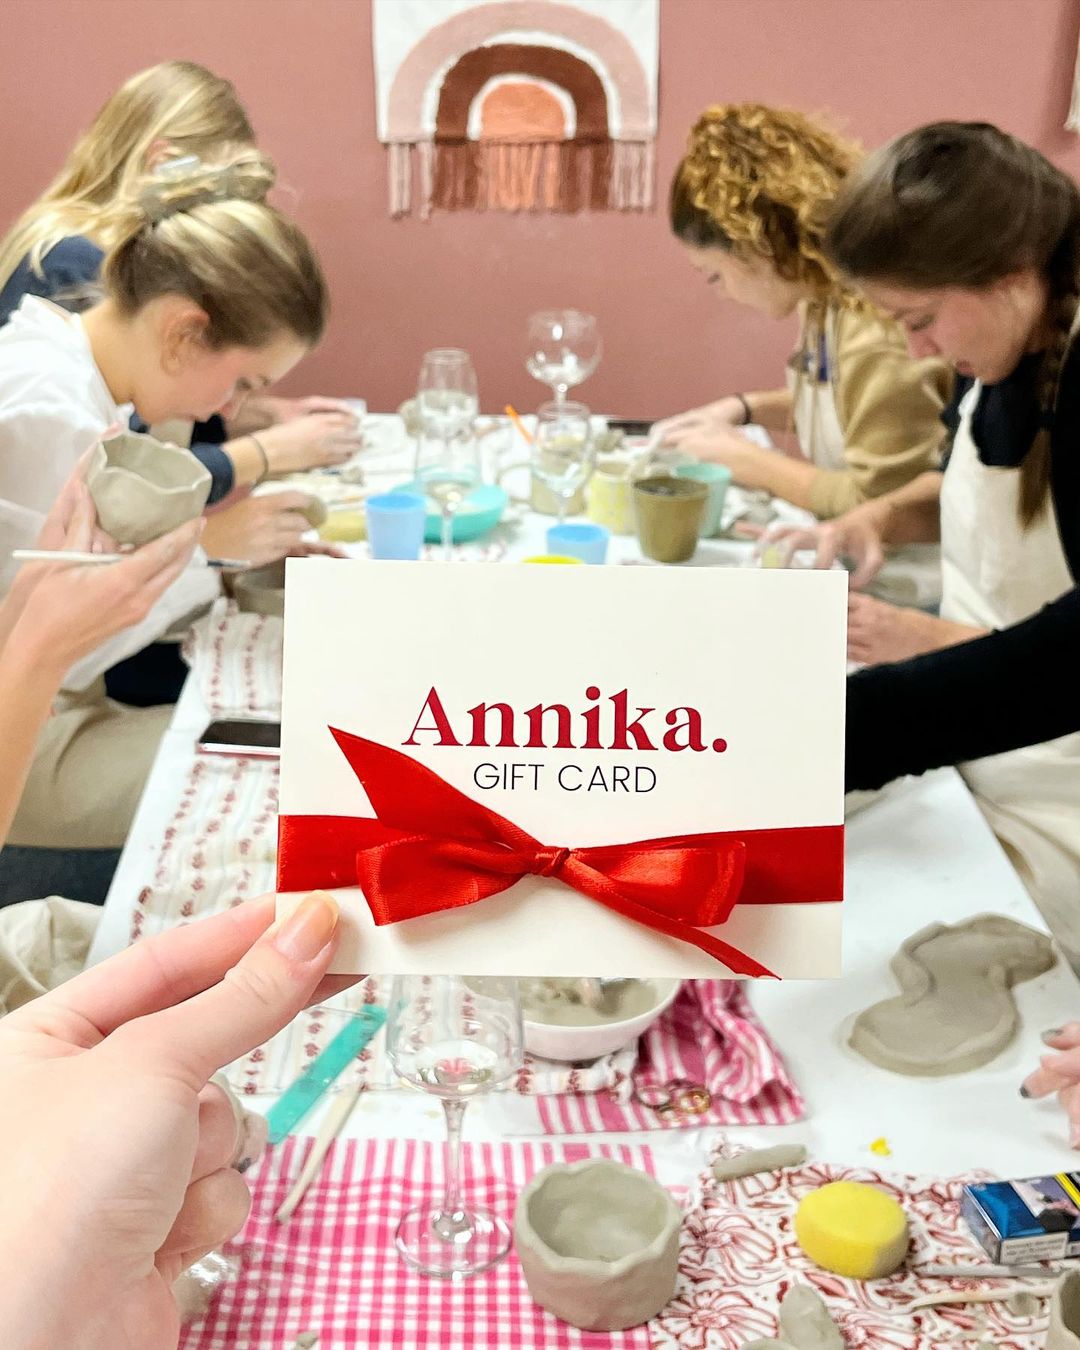 Annika. gift card